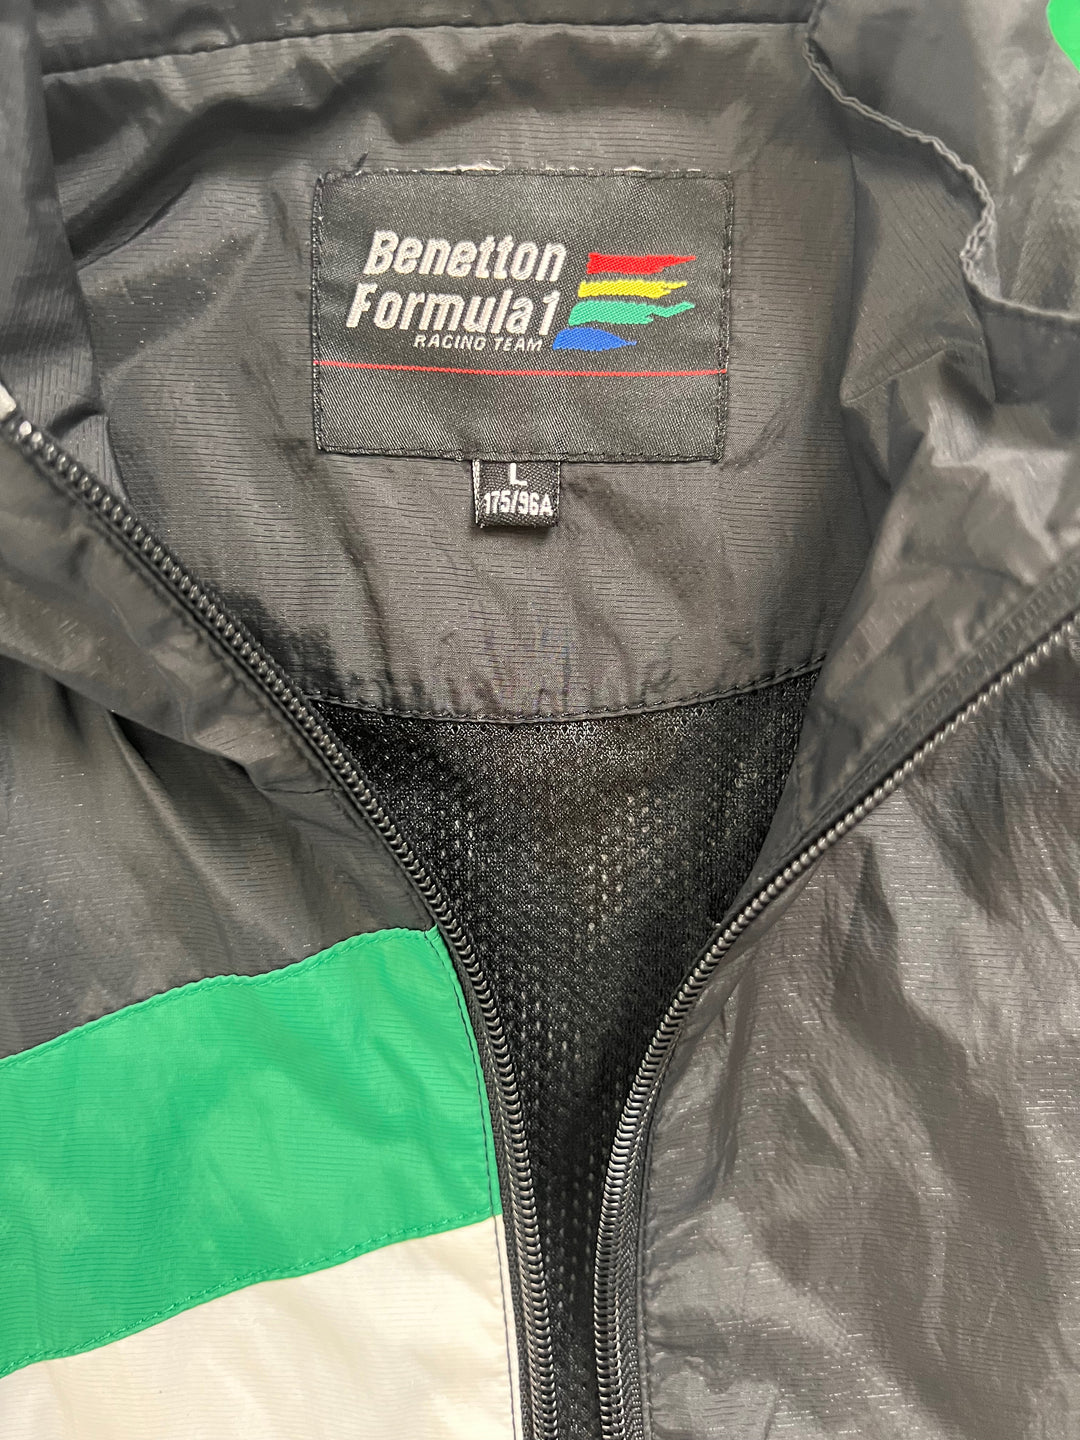 Vintage Benetton Formula 1 Racing Team Black Windbreaker Jacket. Large